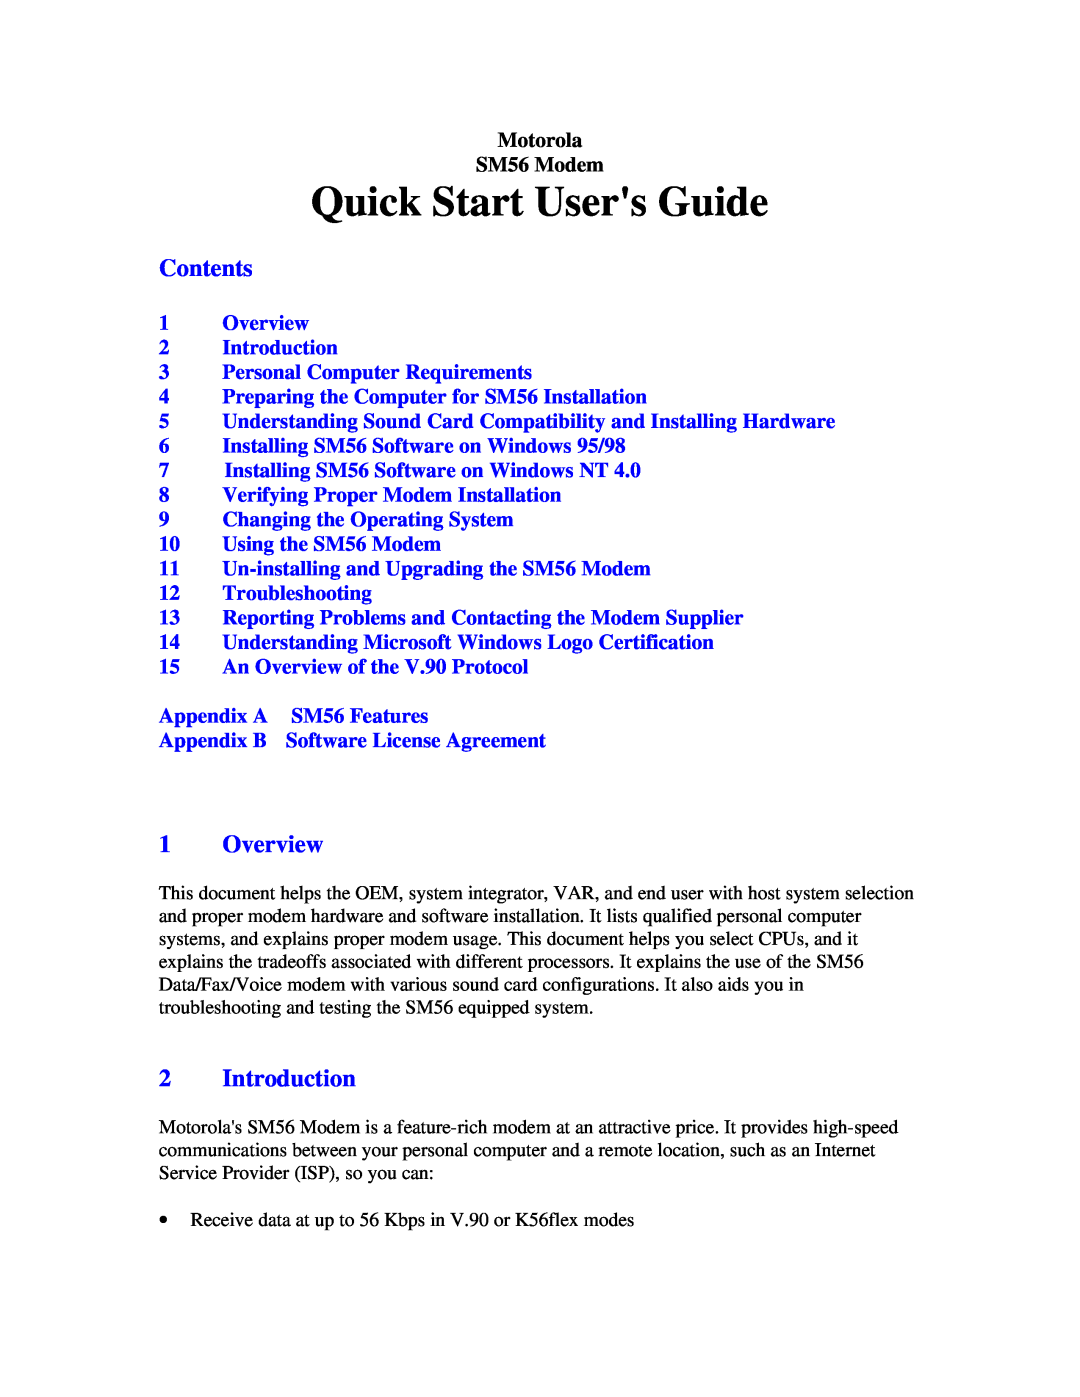 Motorola SM56 quick start Contents, Introduction, Motorola, Quick Start Users Guide 